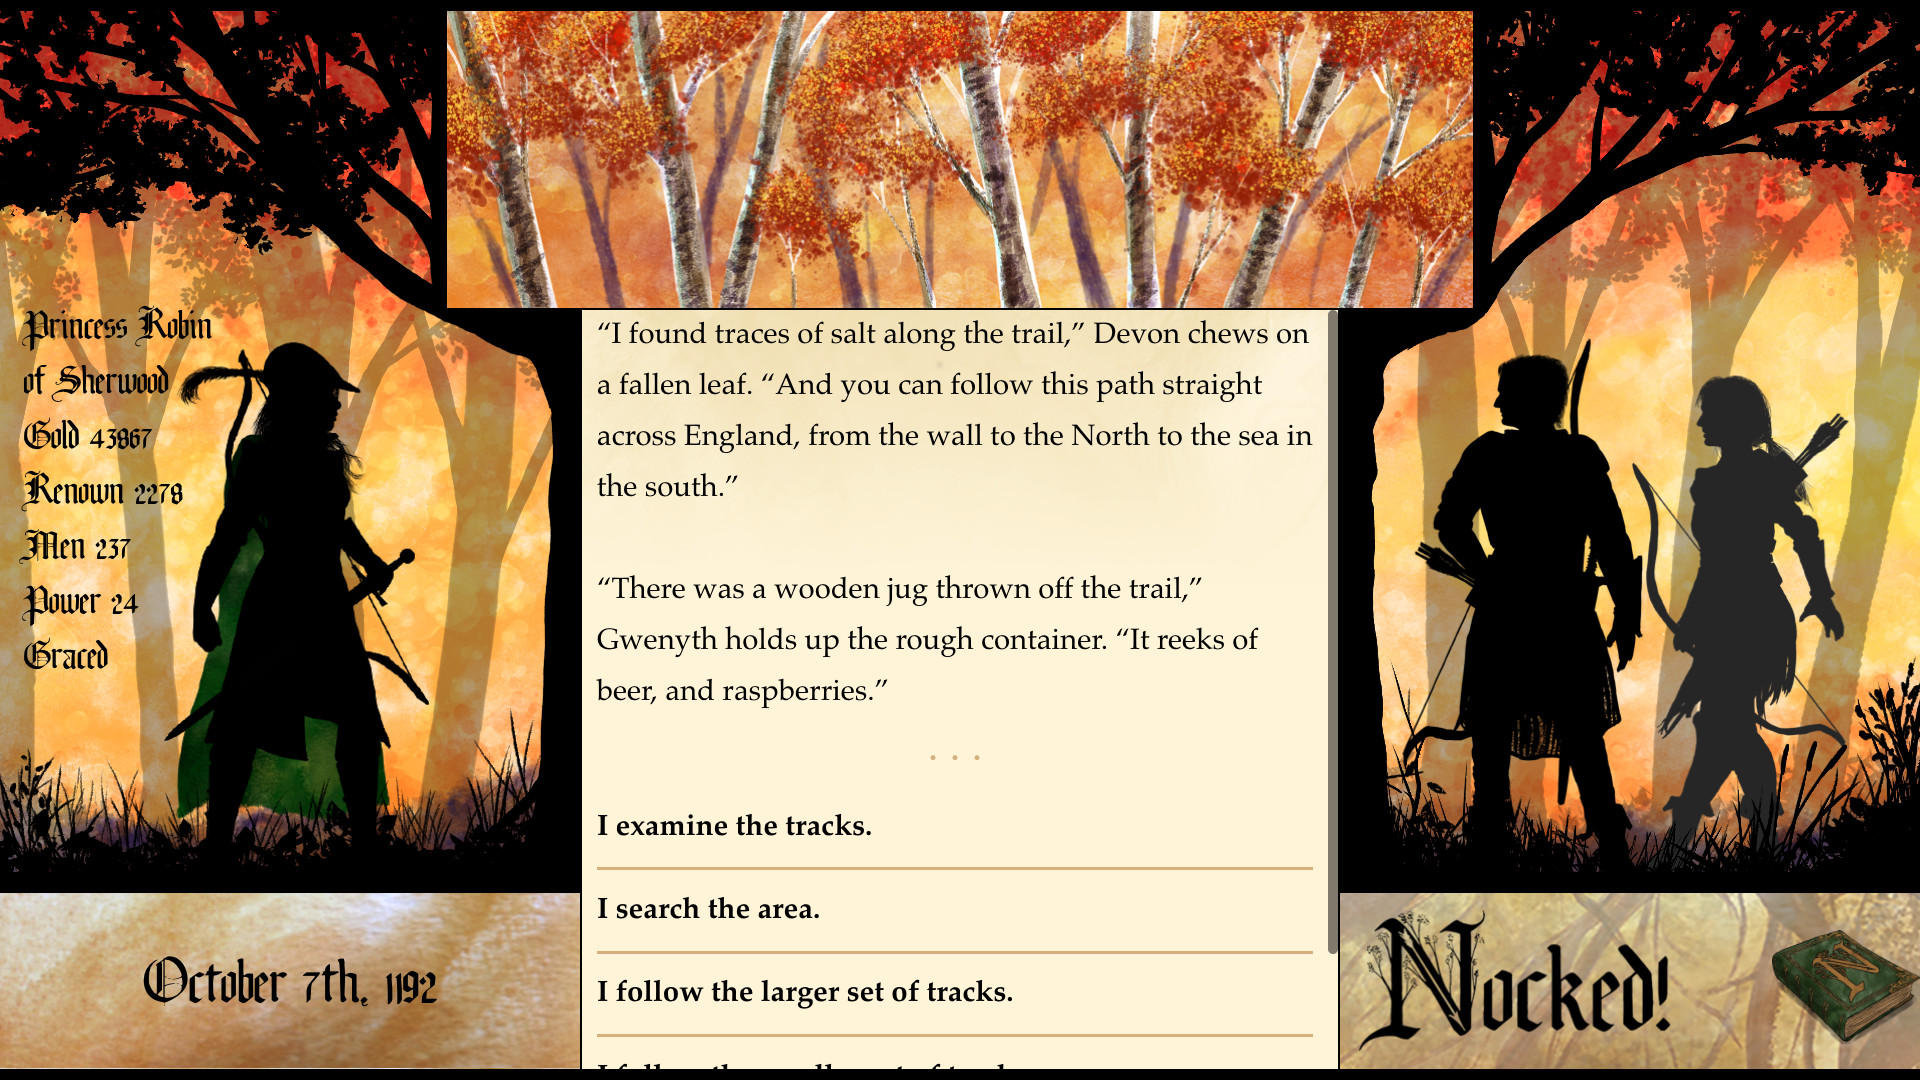 Nocked! True Tales of Robin Hood Free Download